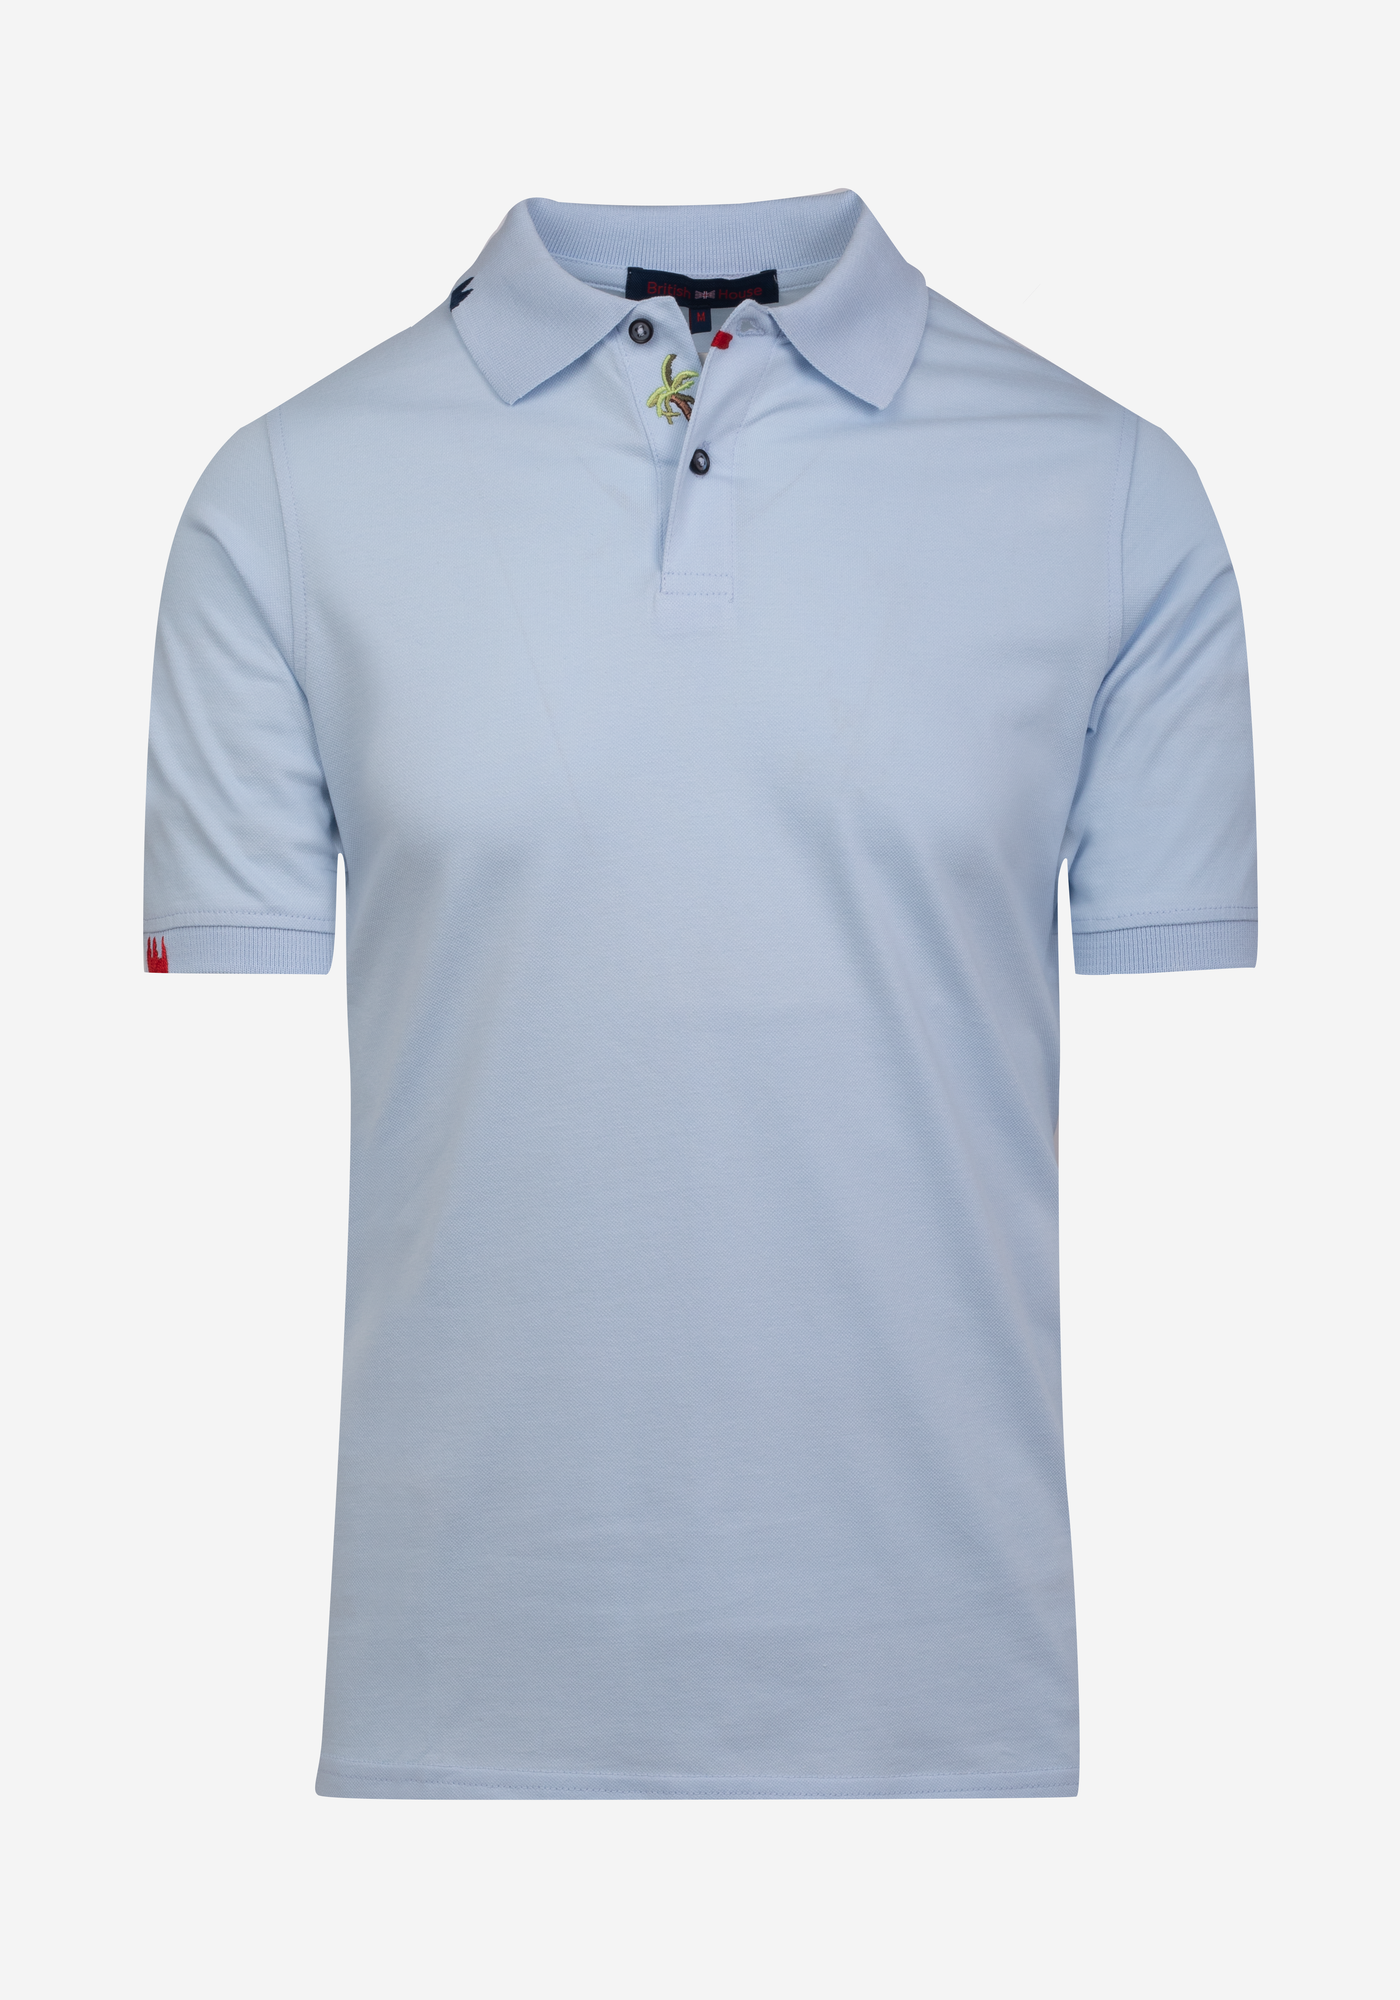 Powder Blue Cotton Polo Shirt